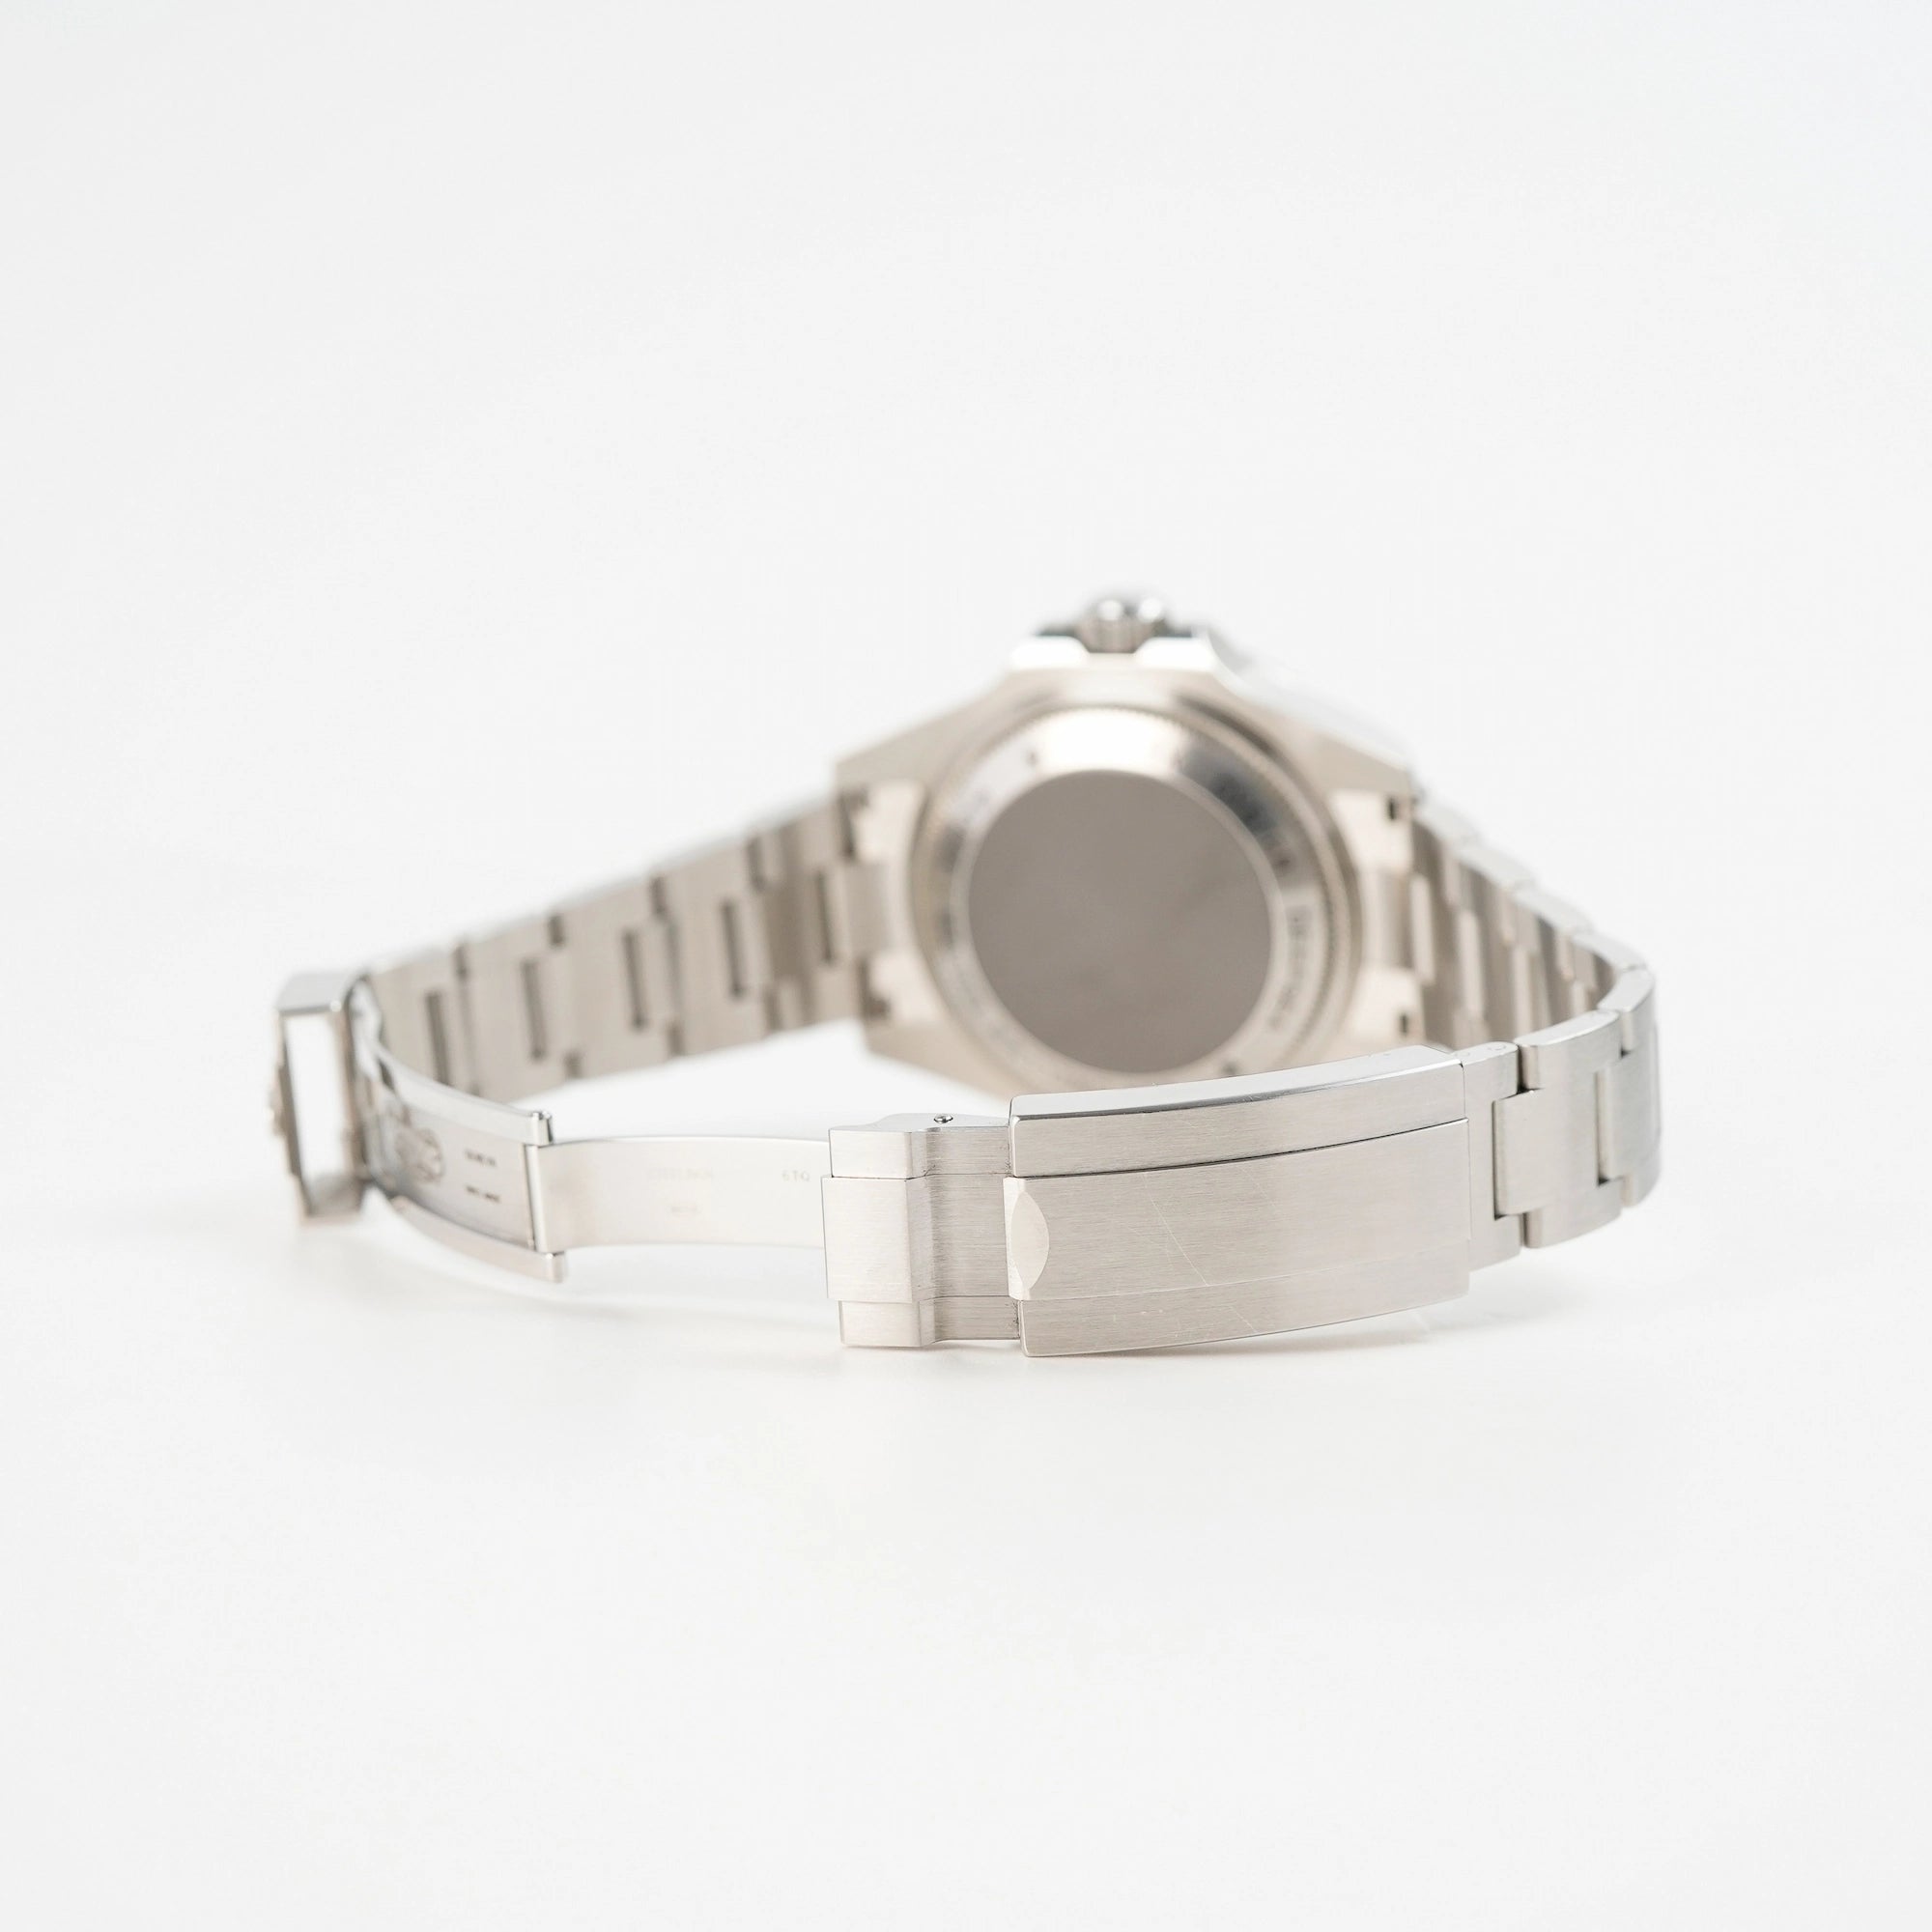 Geöffnete Faltschließe am Edelstahl-Armband der Rolex Sea Dweller Deepsea, Referenz 116660